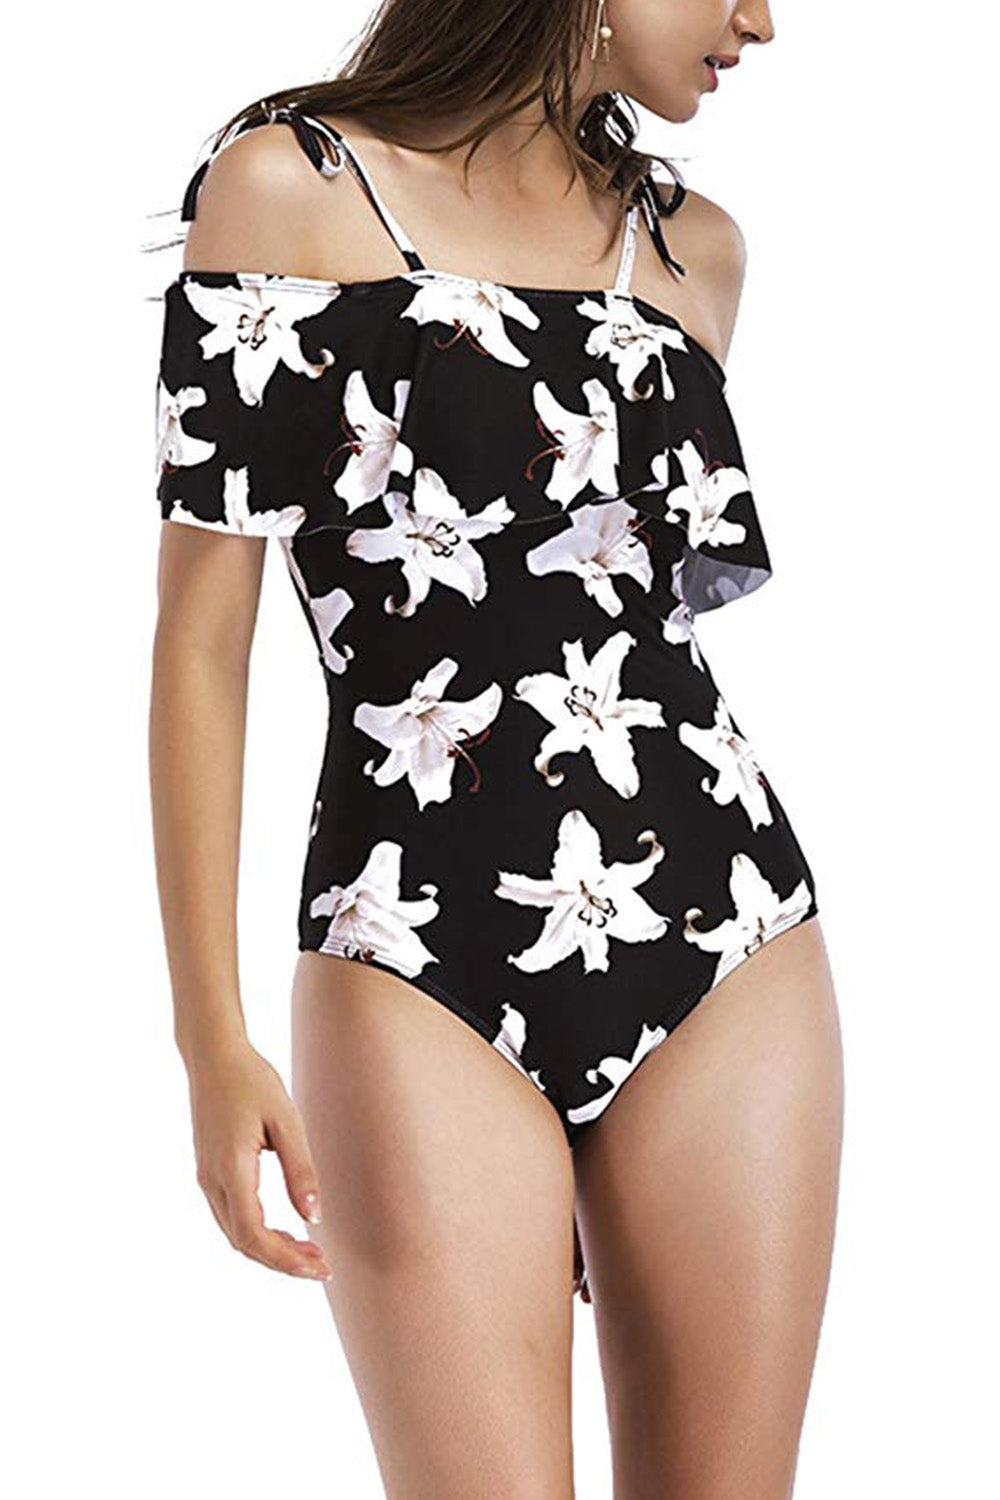 Iyasson Black Floral Print Falbala One-piece Swimsuit